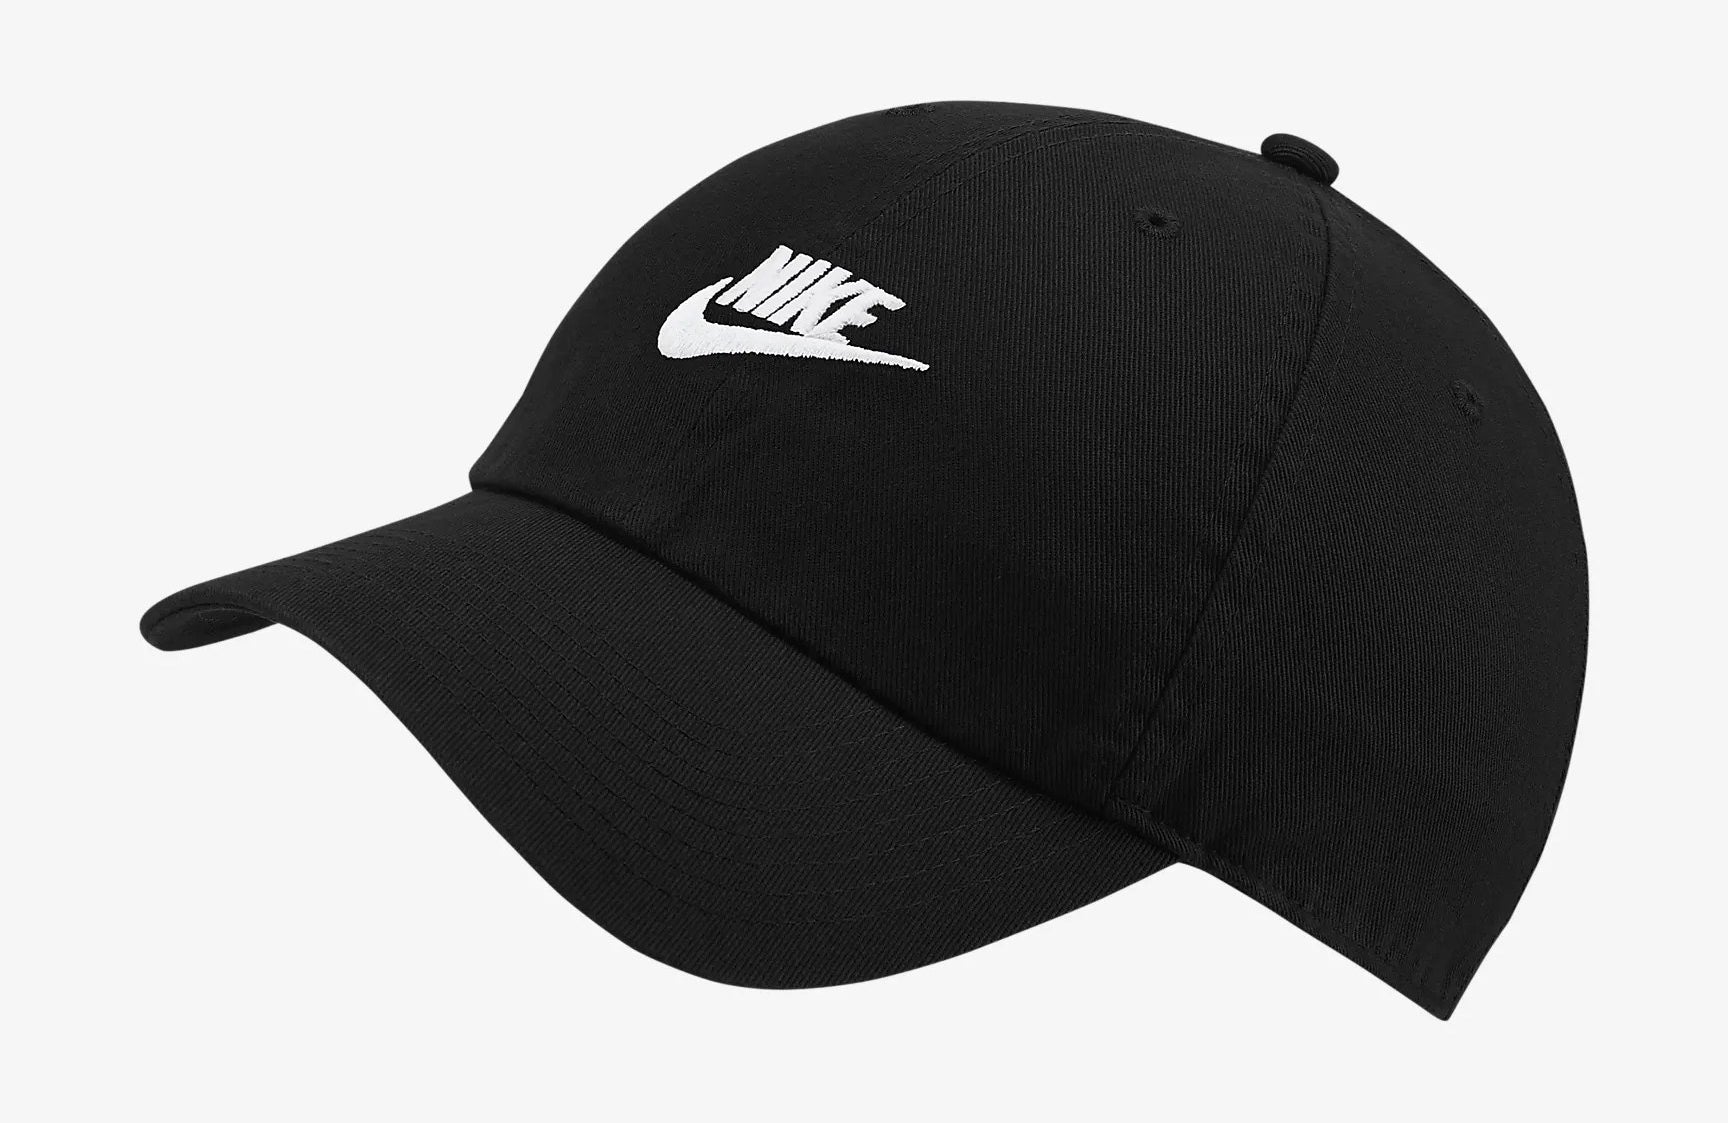 A black baseball hat with Nike logo